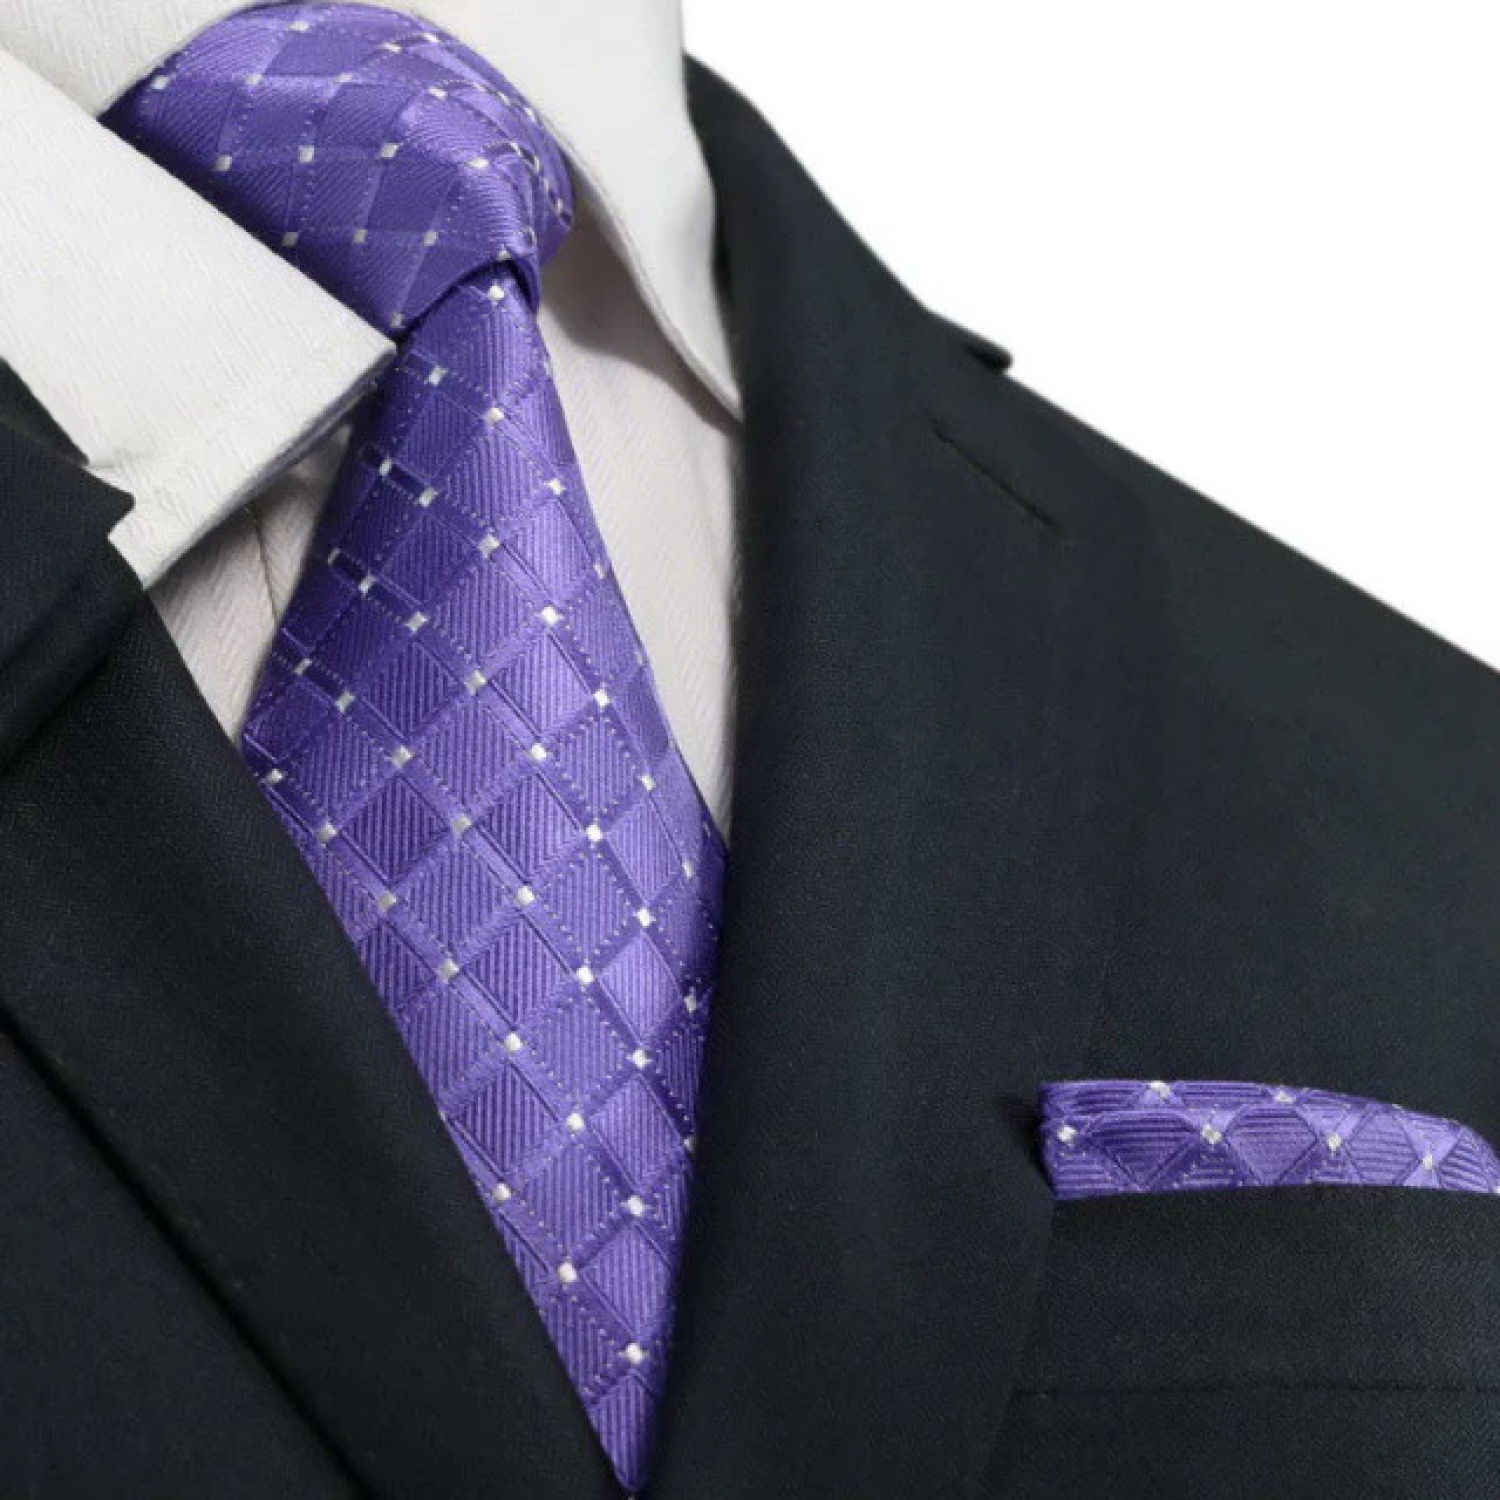 A Purple, White Geometric Diamond With Small Check Pattern Silk Necktie, Matching Pocket Square